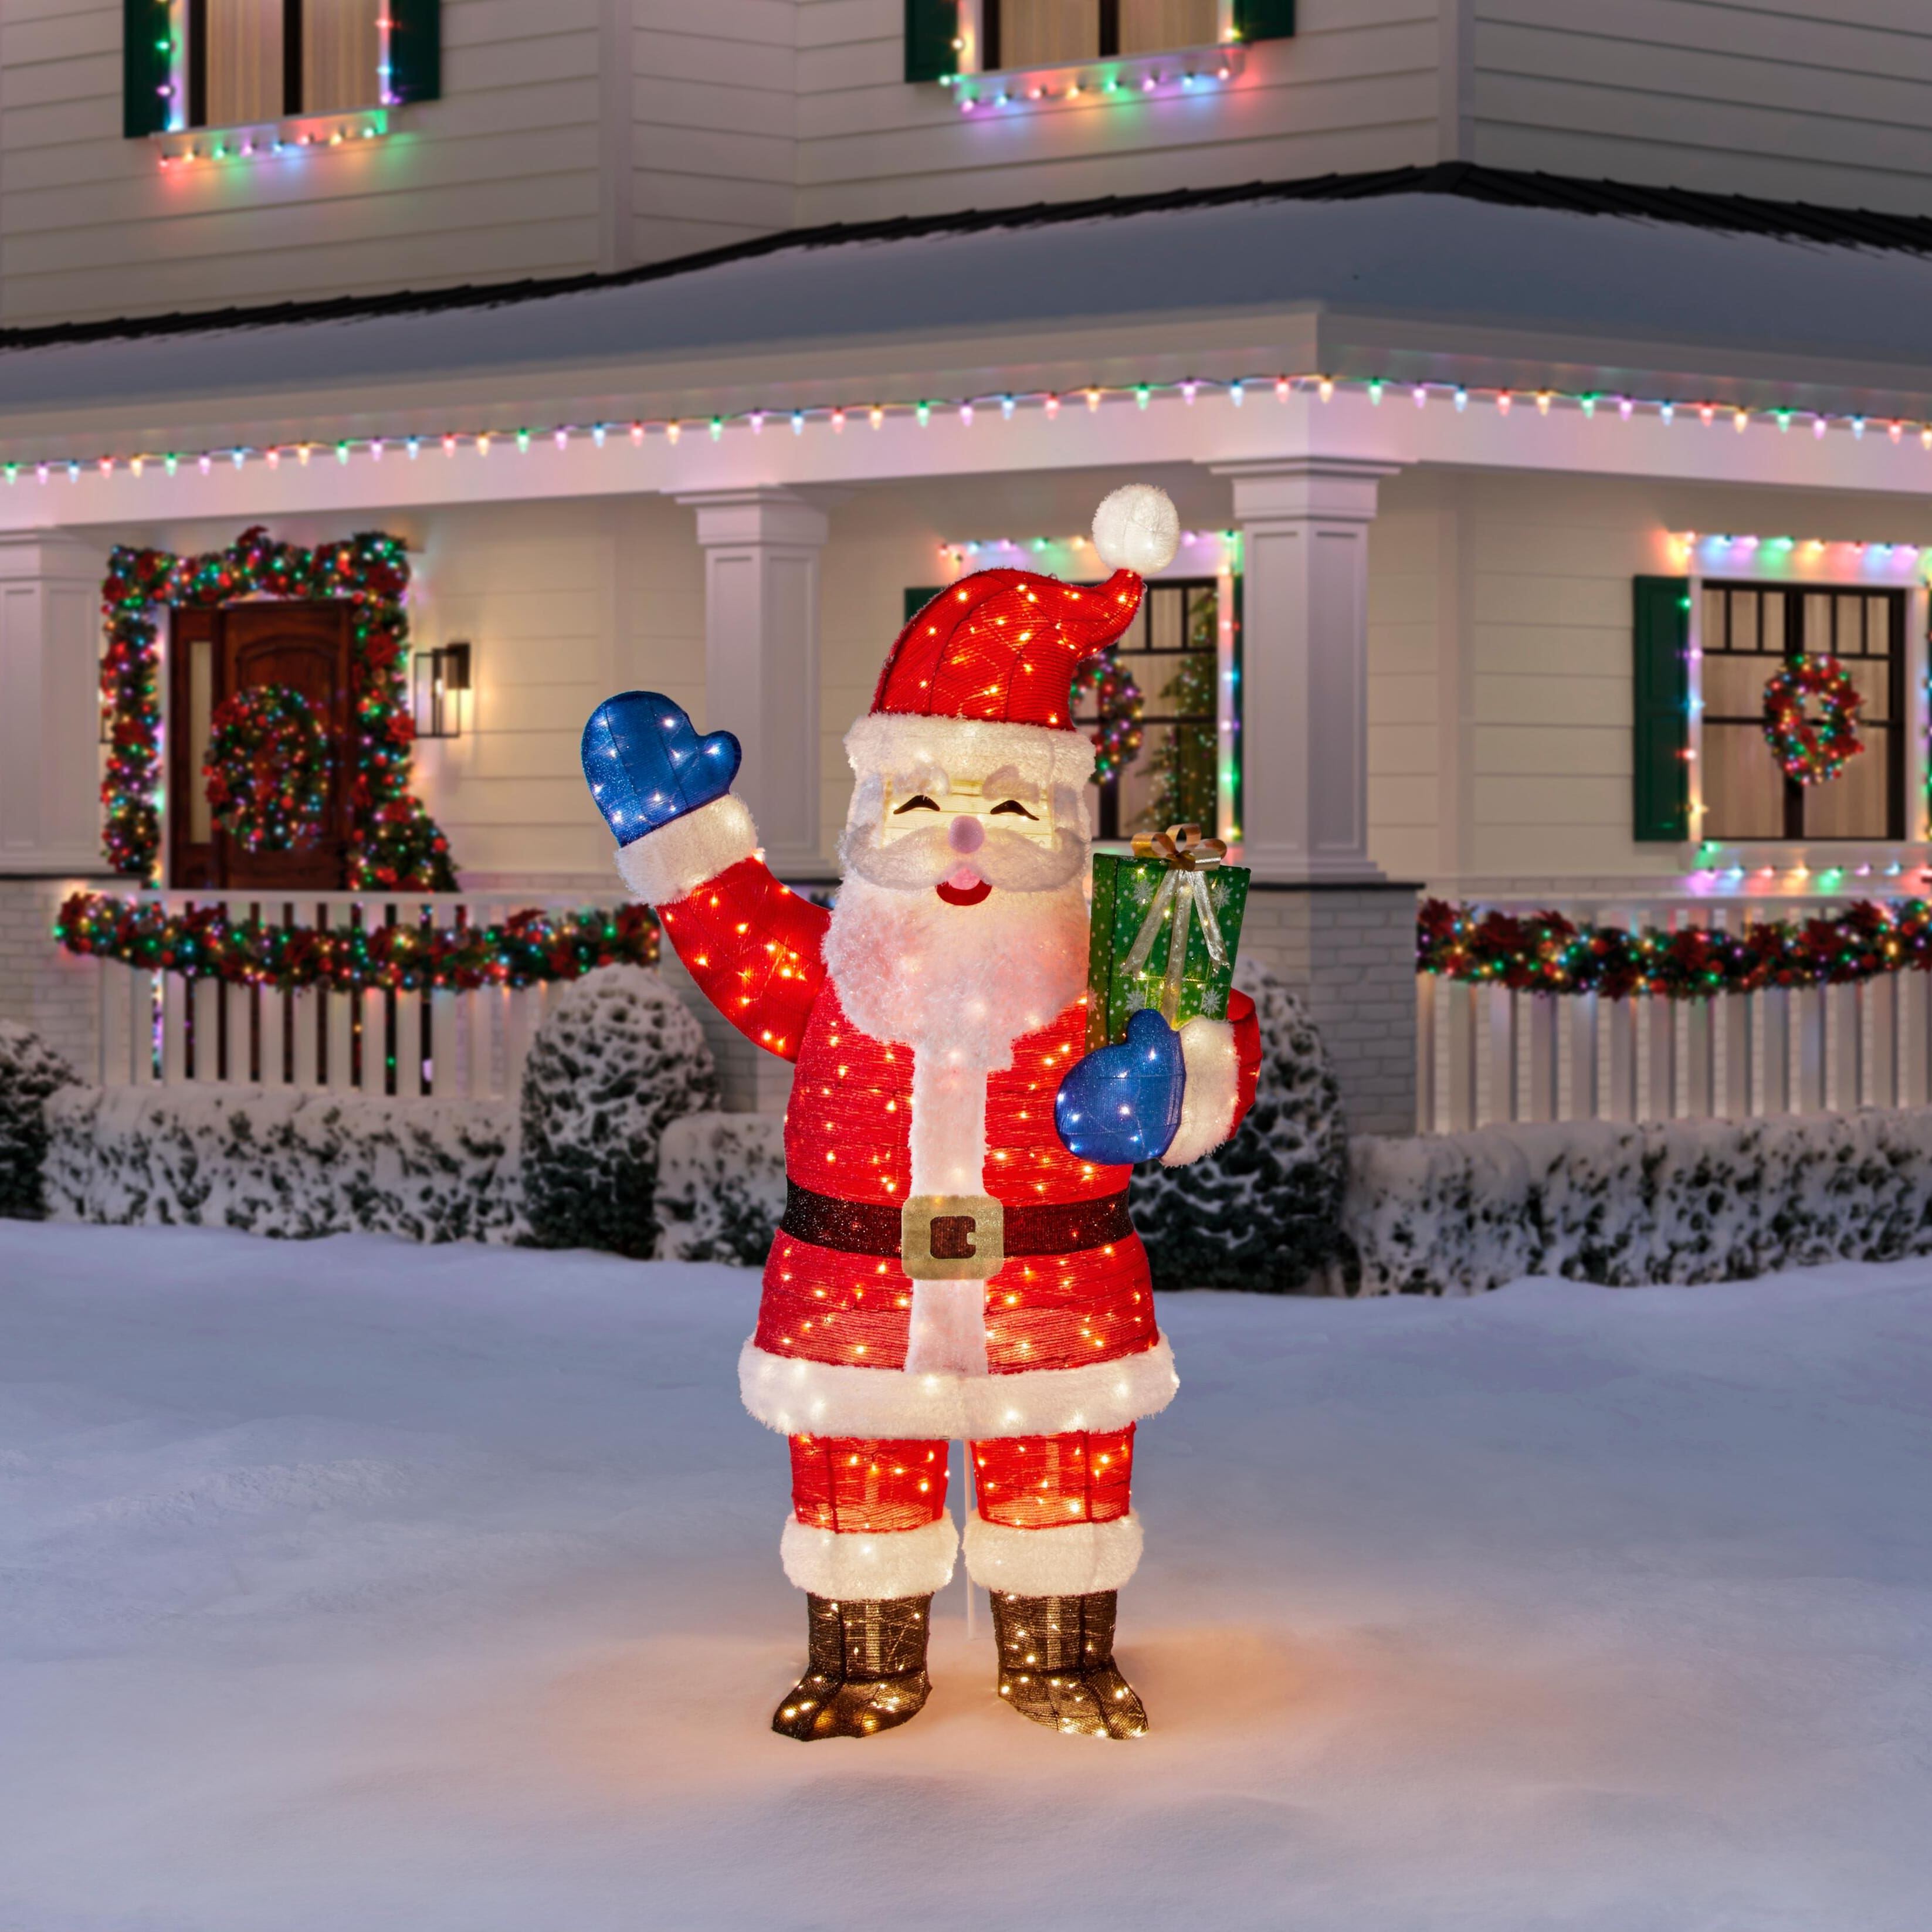  Holiday Christmas Decor 10 Wide, 10 Yard Decorative Mesh Rolls  (Santa Red, Snow White, Pine Tree Green)